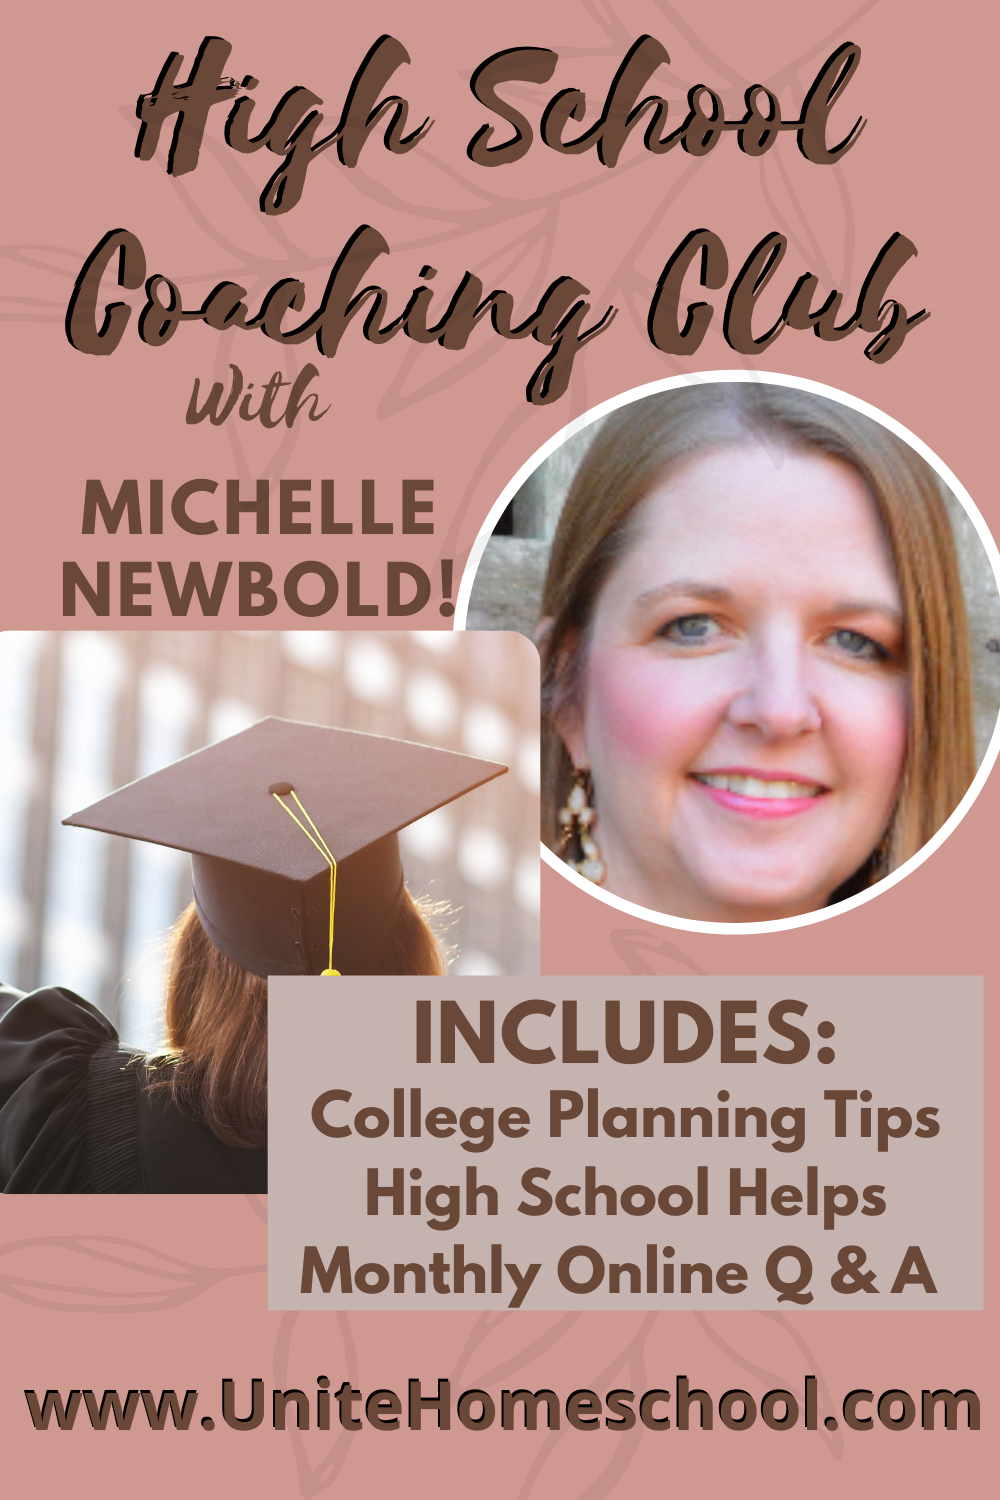 Announcing: High School Parents Coaching Club!